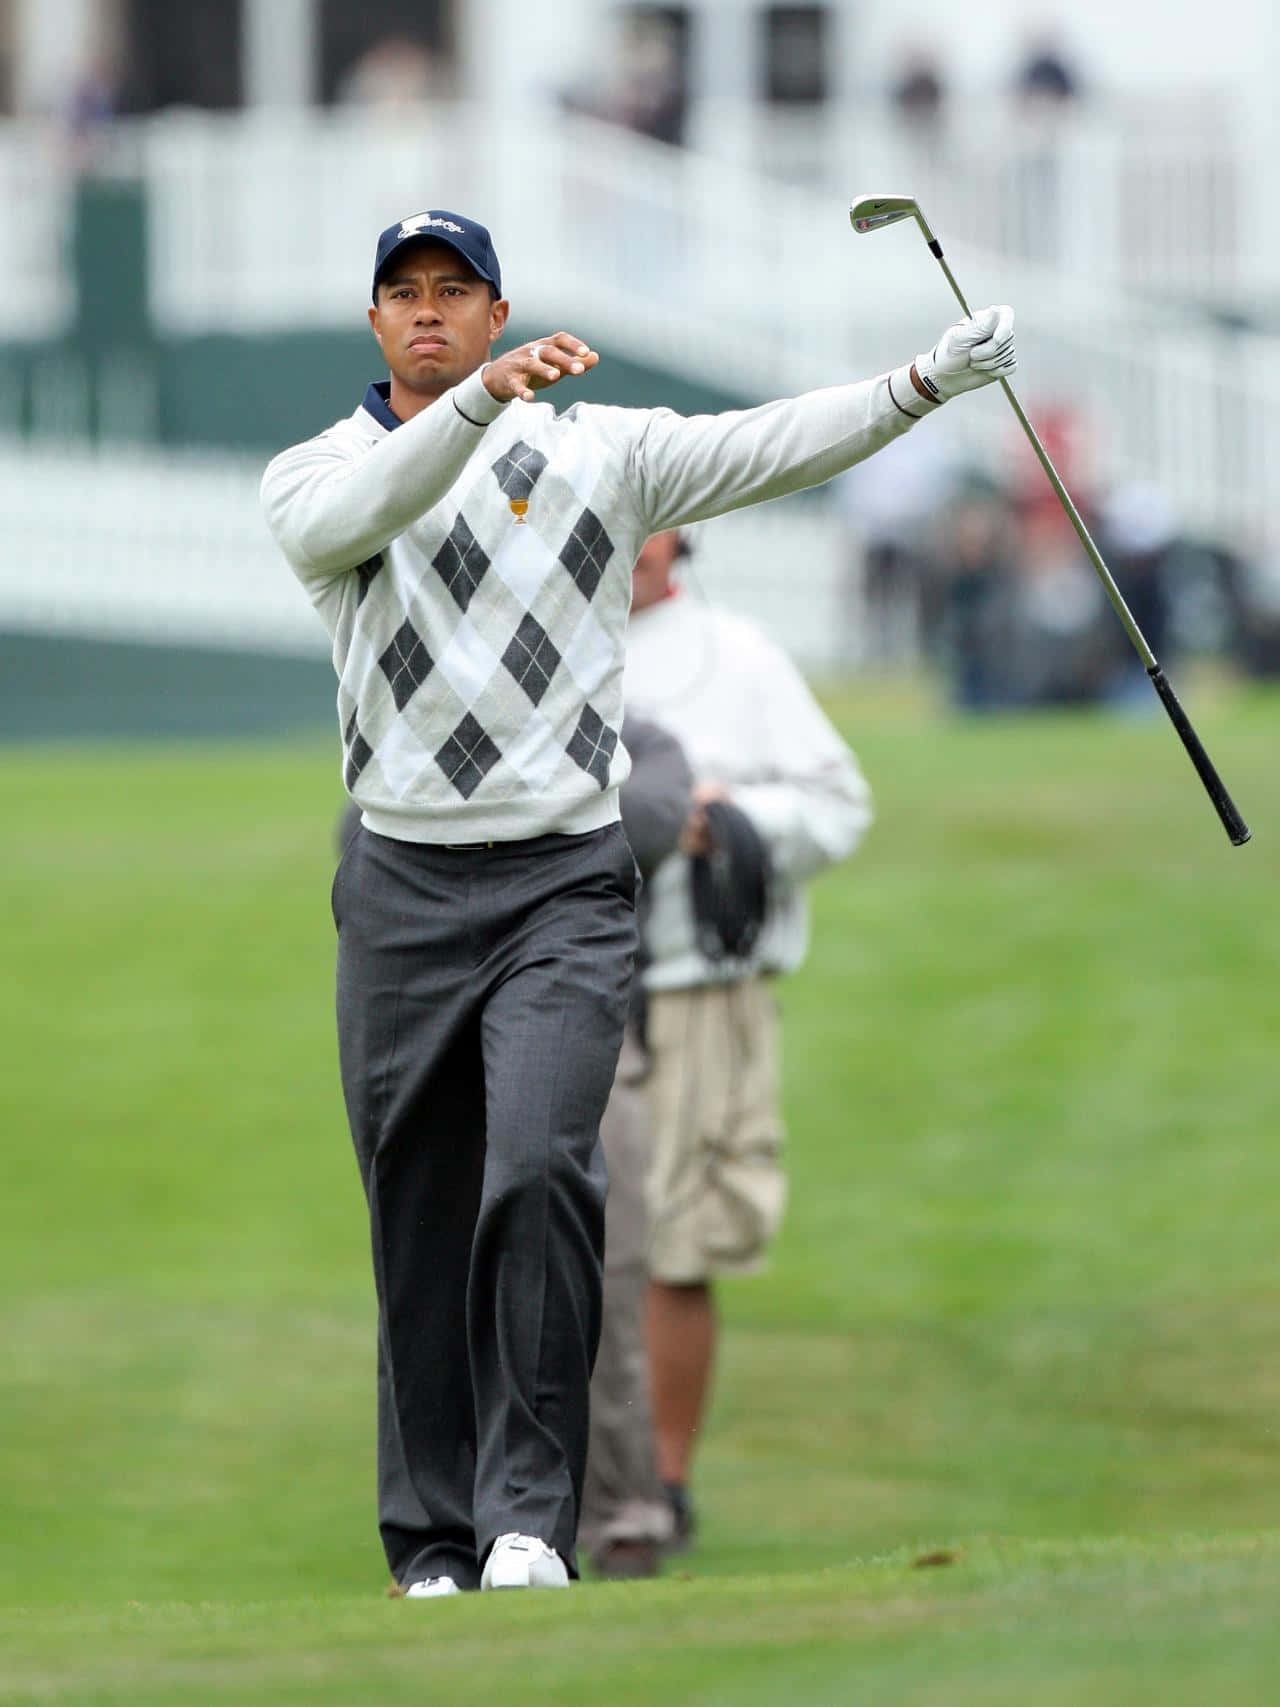 Vistoen El Fondo De Pantalla Del Iphone De Tiger Woods En El Campo De Golf The Gold Course. Fondo de pantalla